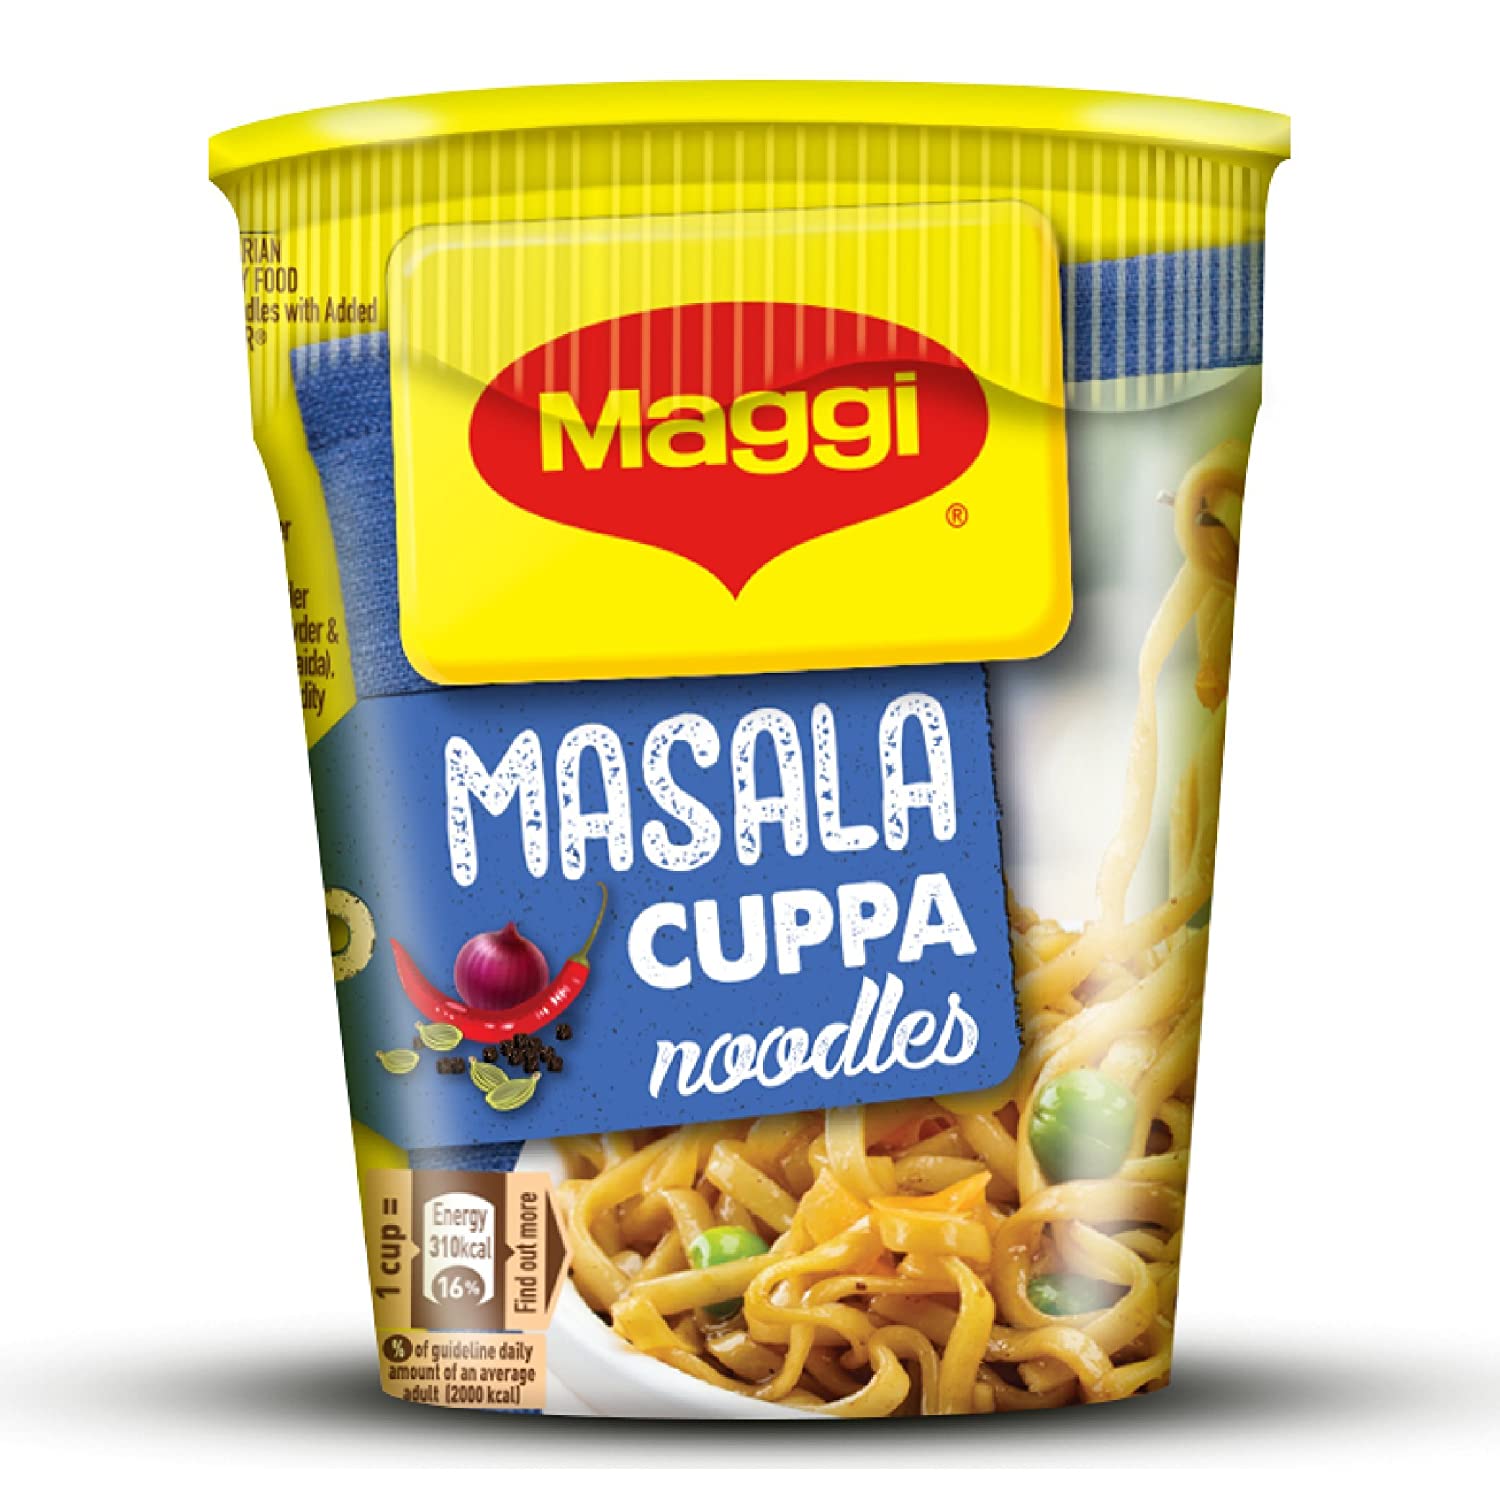 Maggi Masala Cup Noodles (73.00gm)